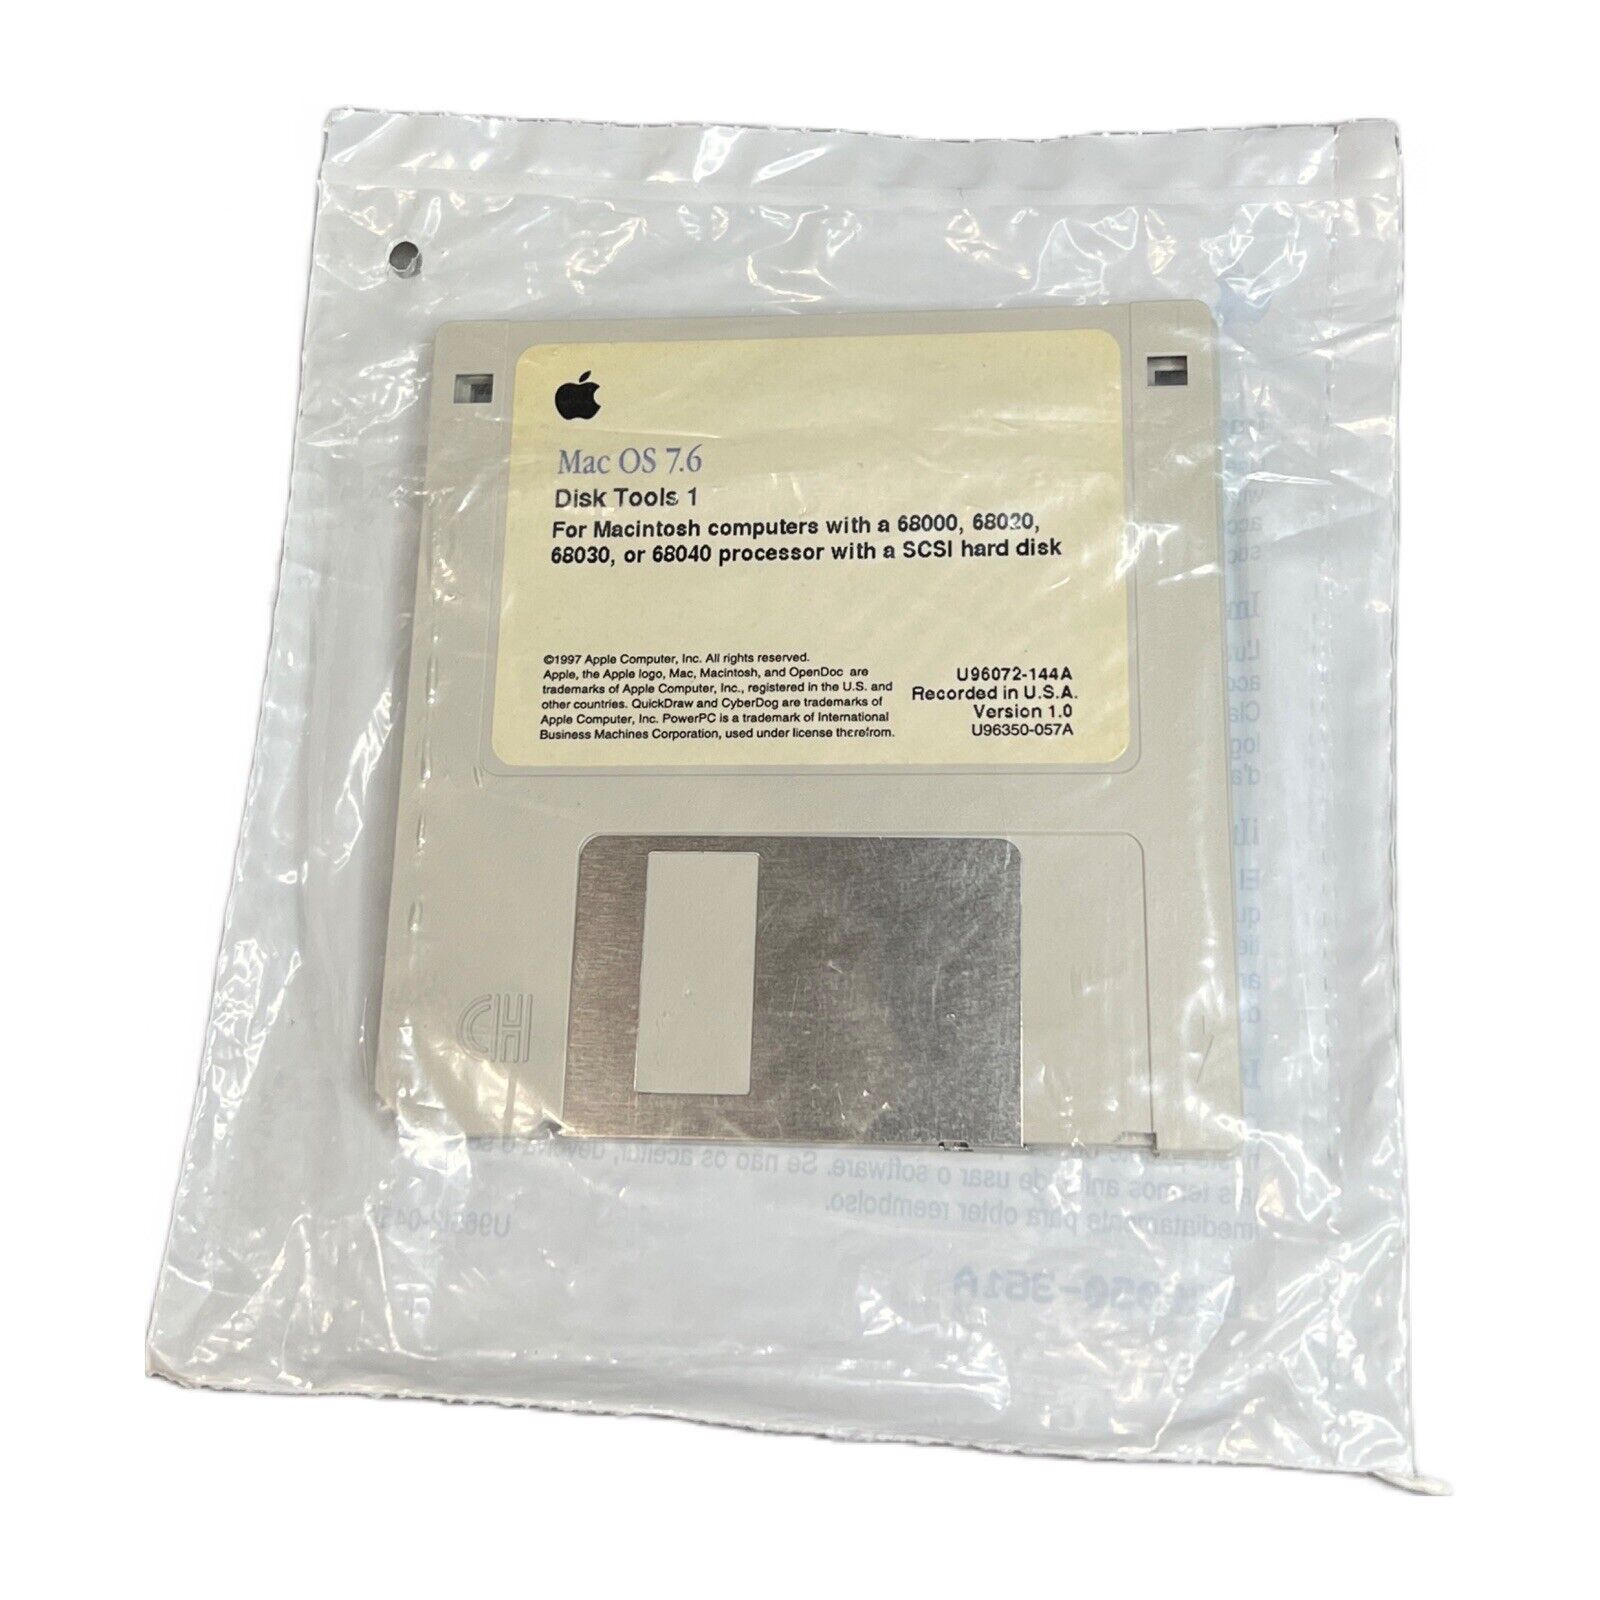 Vintage Apple MAC OS 7.6 Disk Tools 1 & 2 for Macintosh 3.5” Disks, 1997